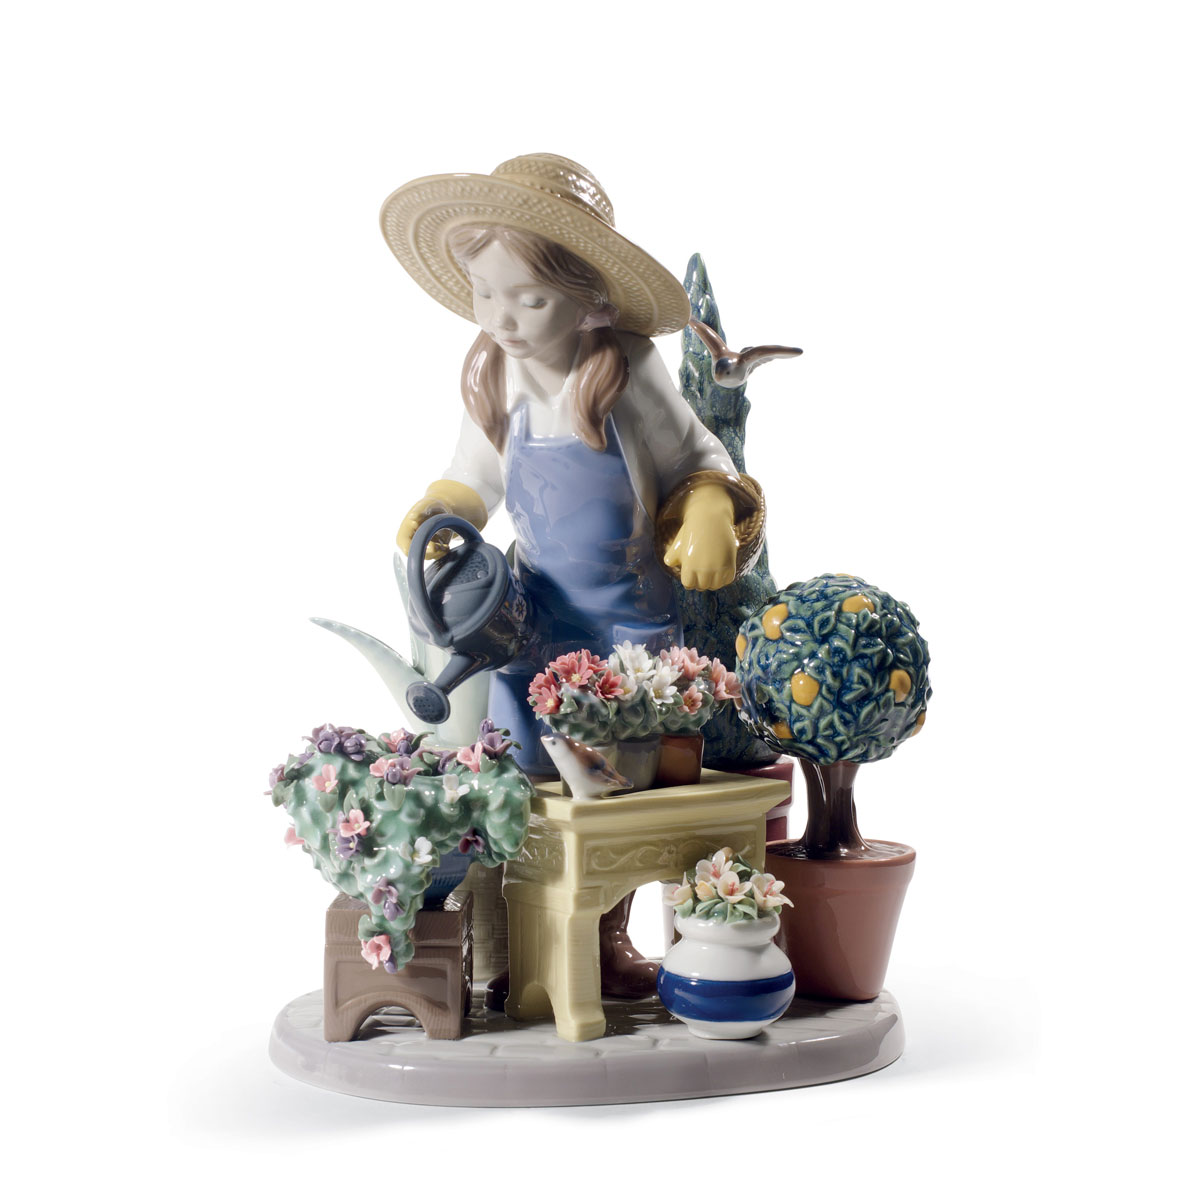 Lladro Classic Sculpture, In My Garden Girl Figurine